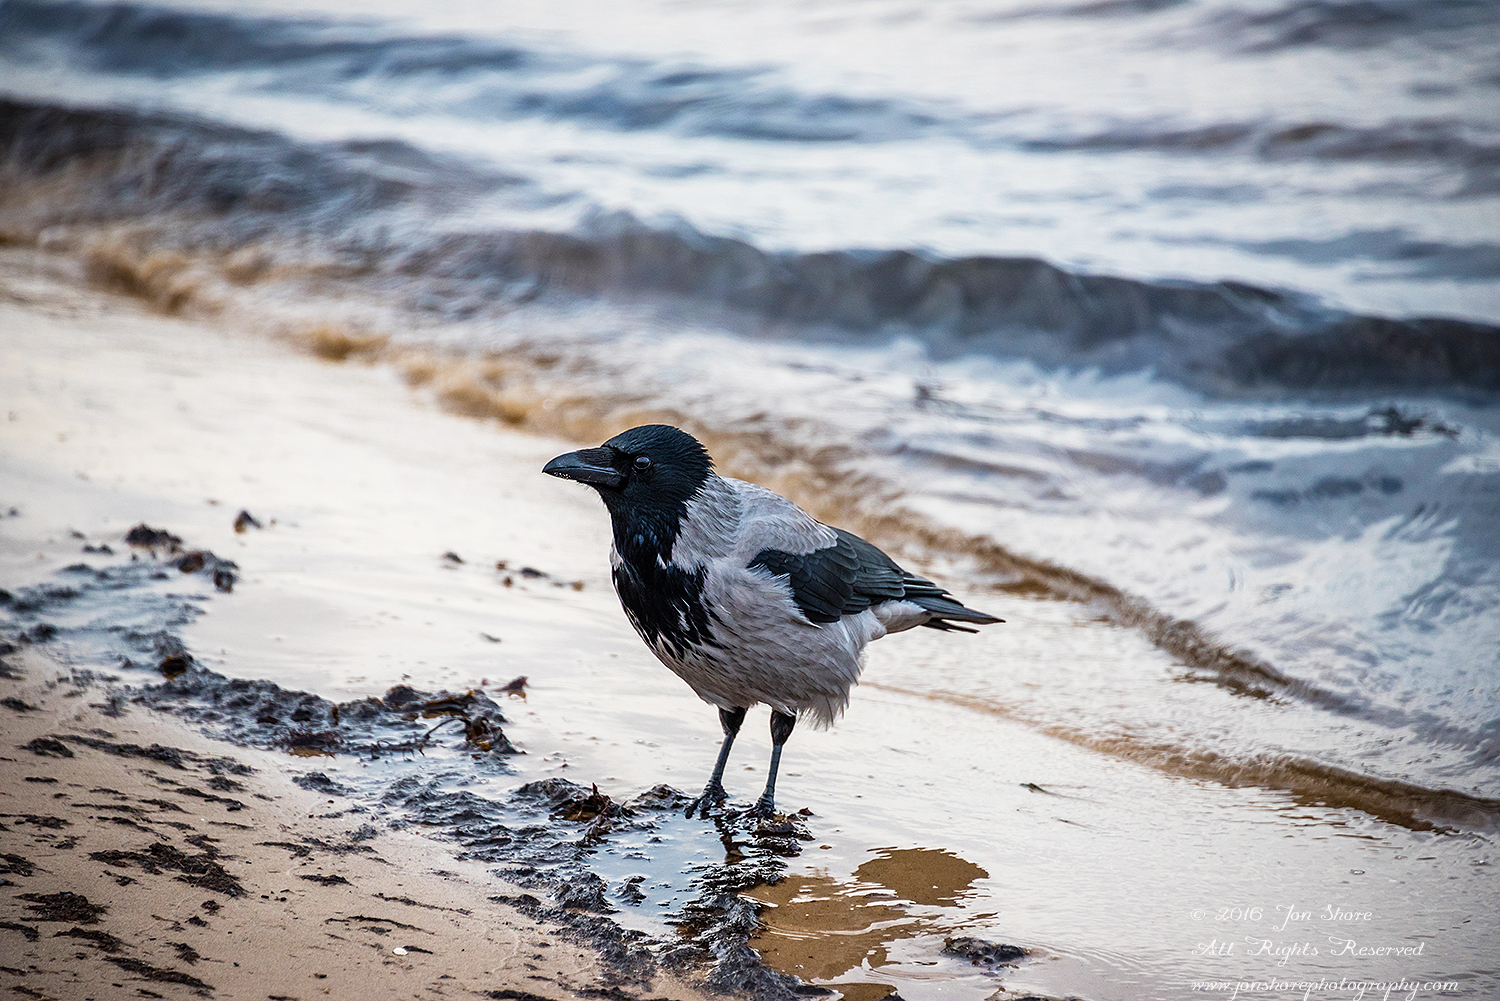 Black Headed Crow on a Latvian beach. Nikkor 300mm